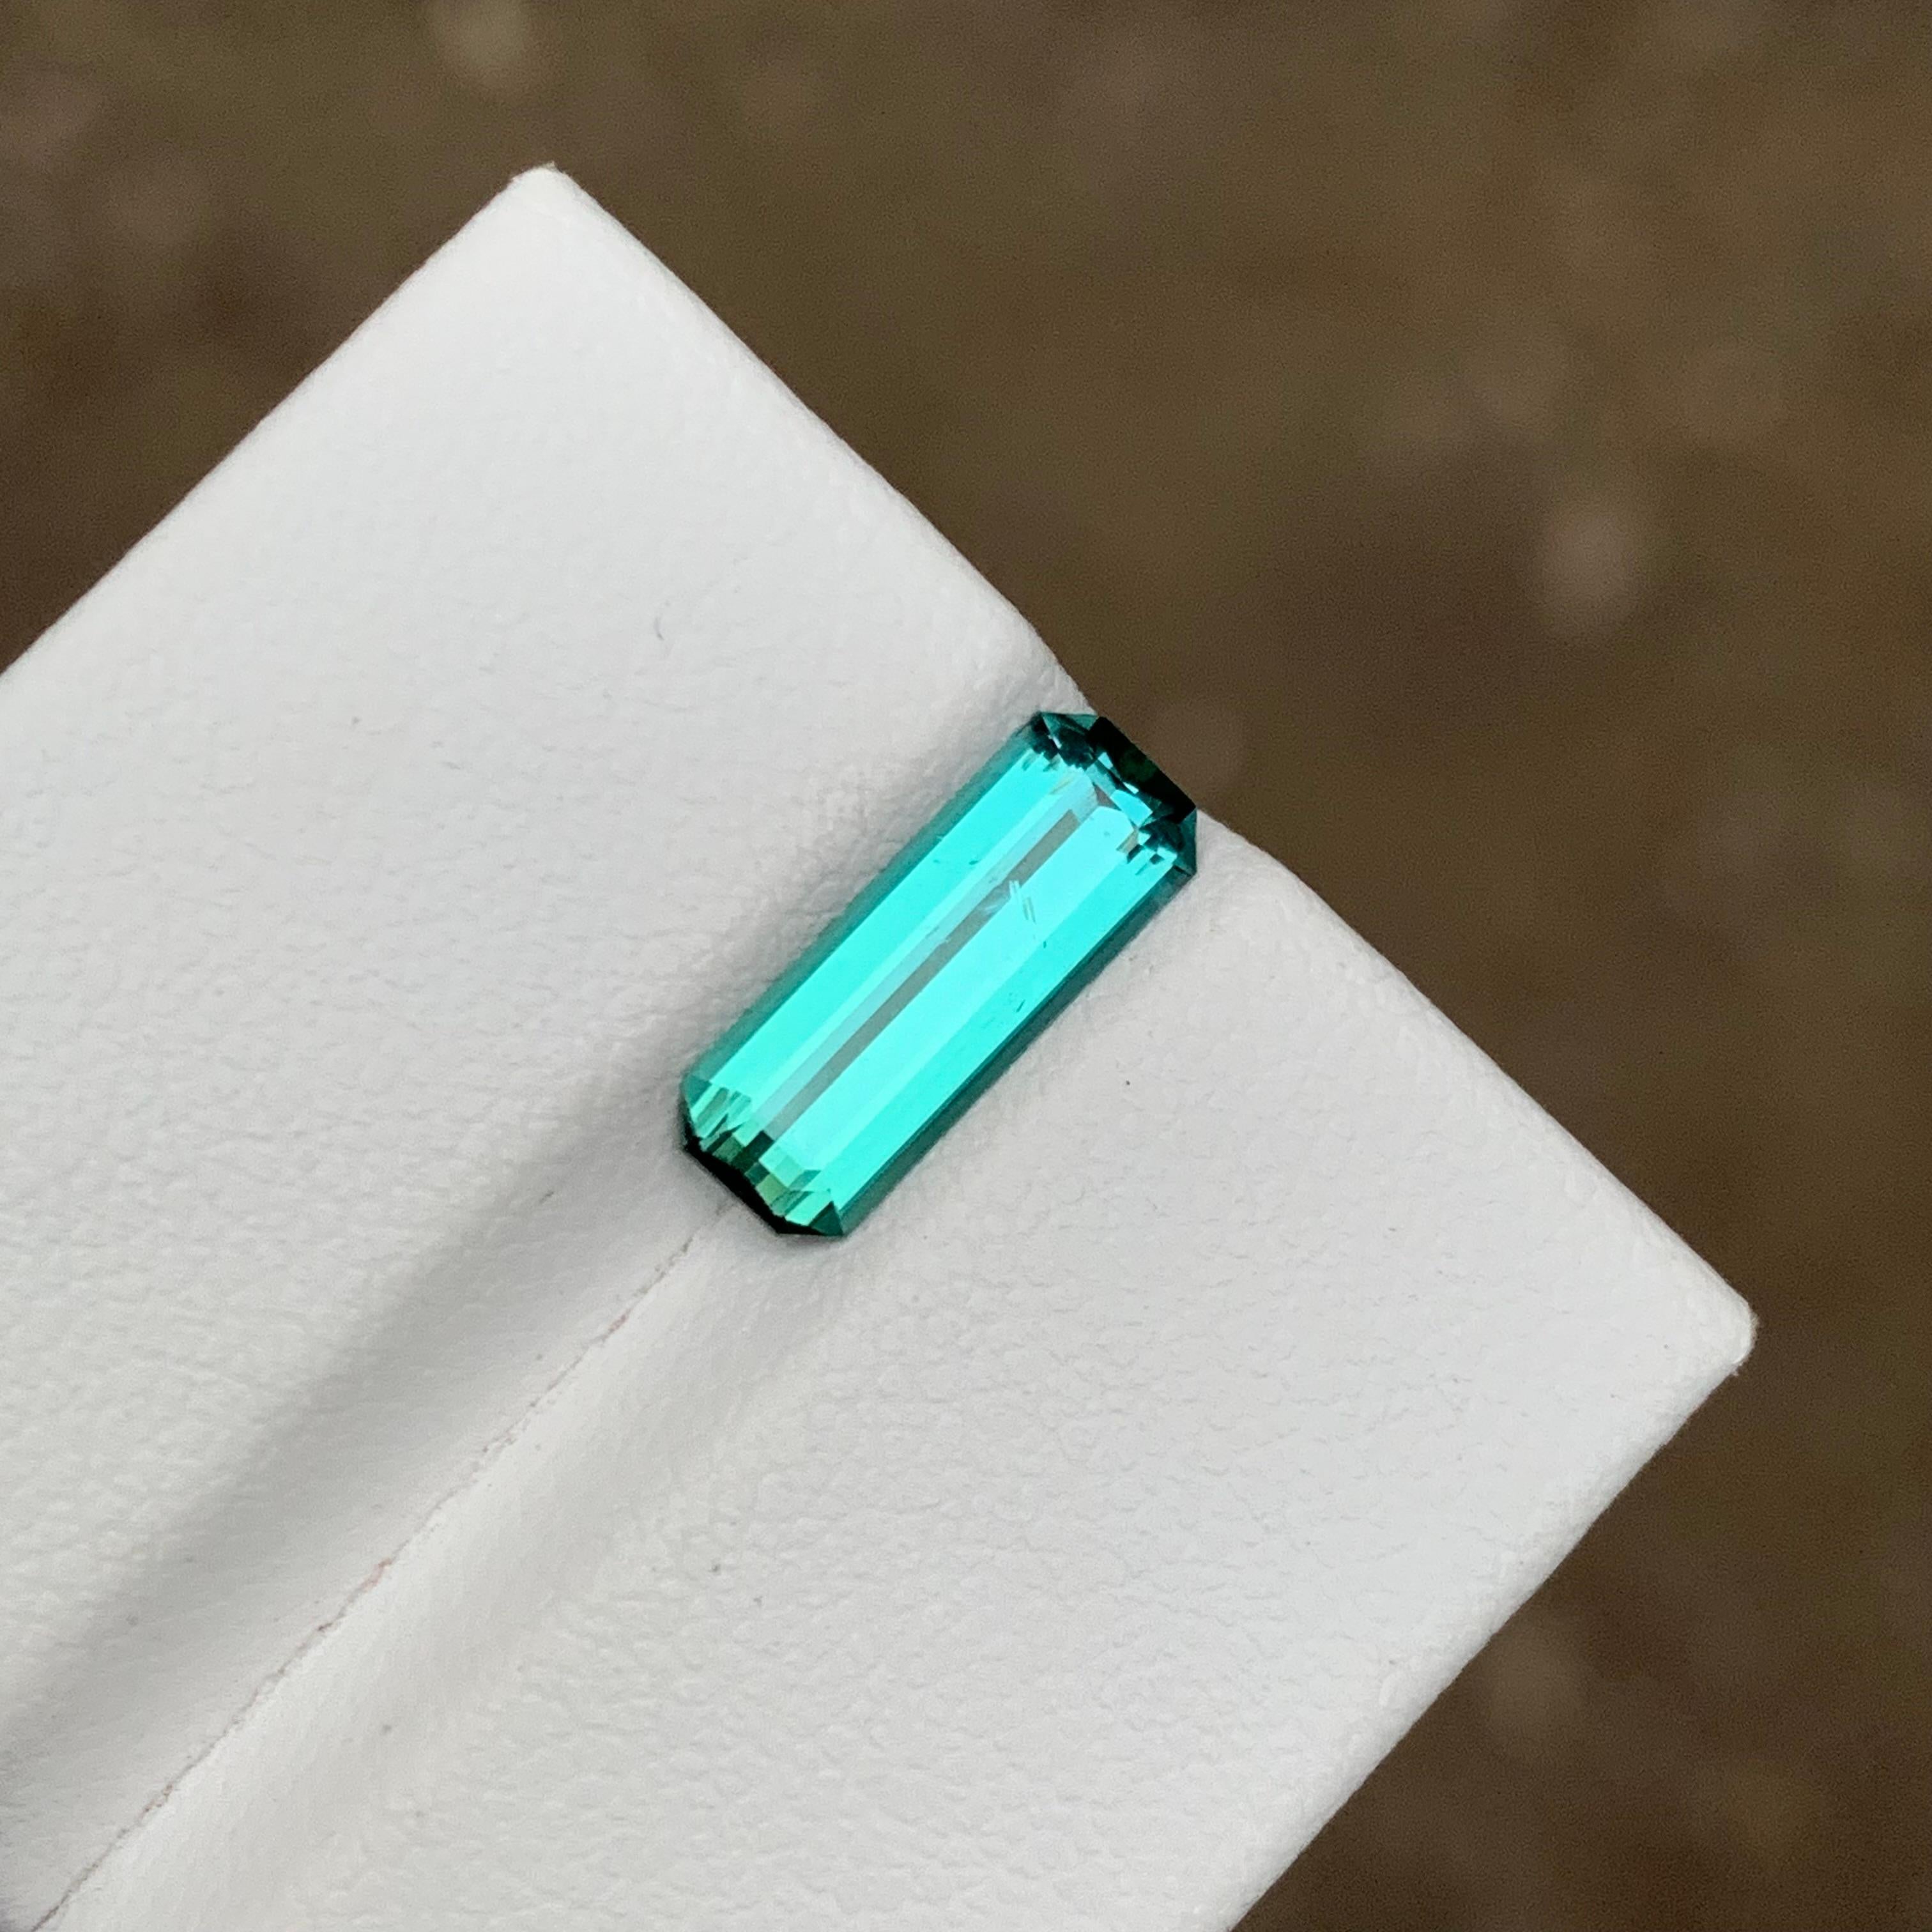 Rare Vivid Neon Bluish Green Hue Tourmaline Gemstone 1.75Ct Emerald Cut for Ring For Sale 1